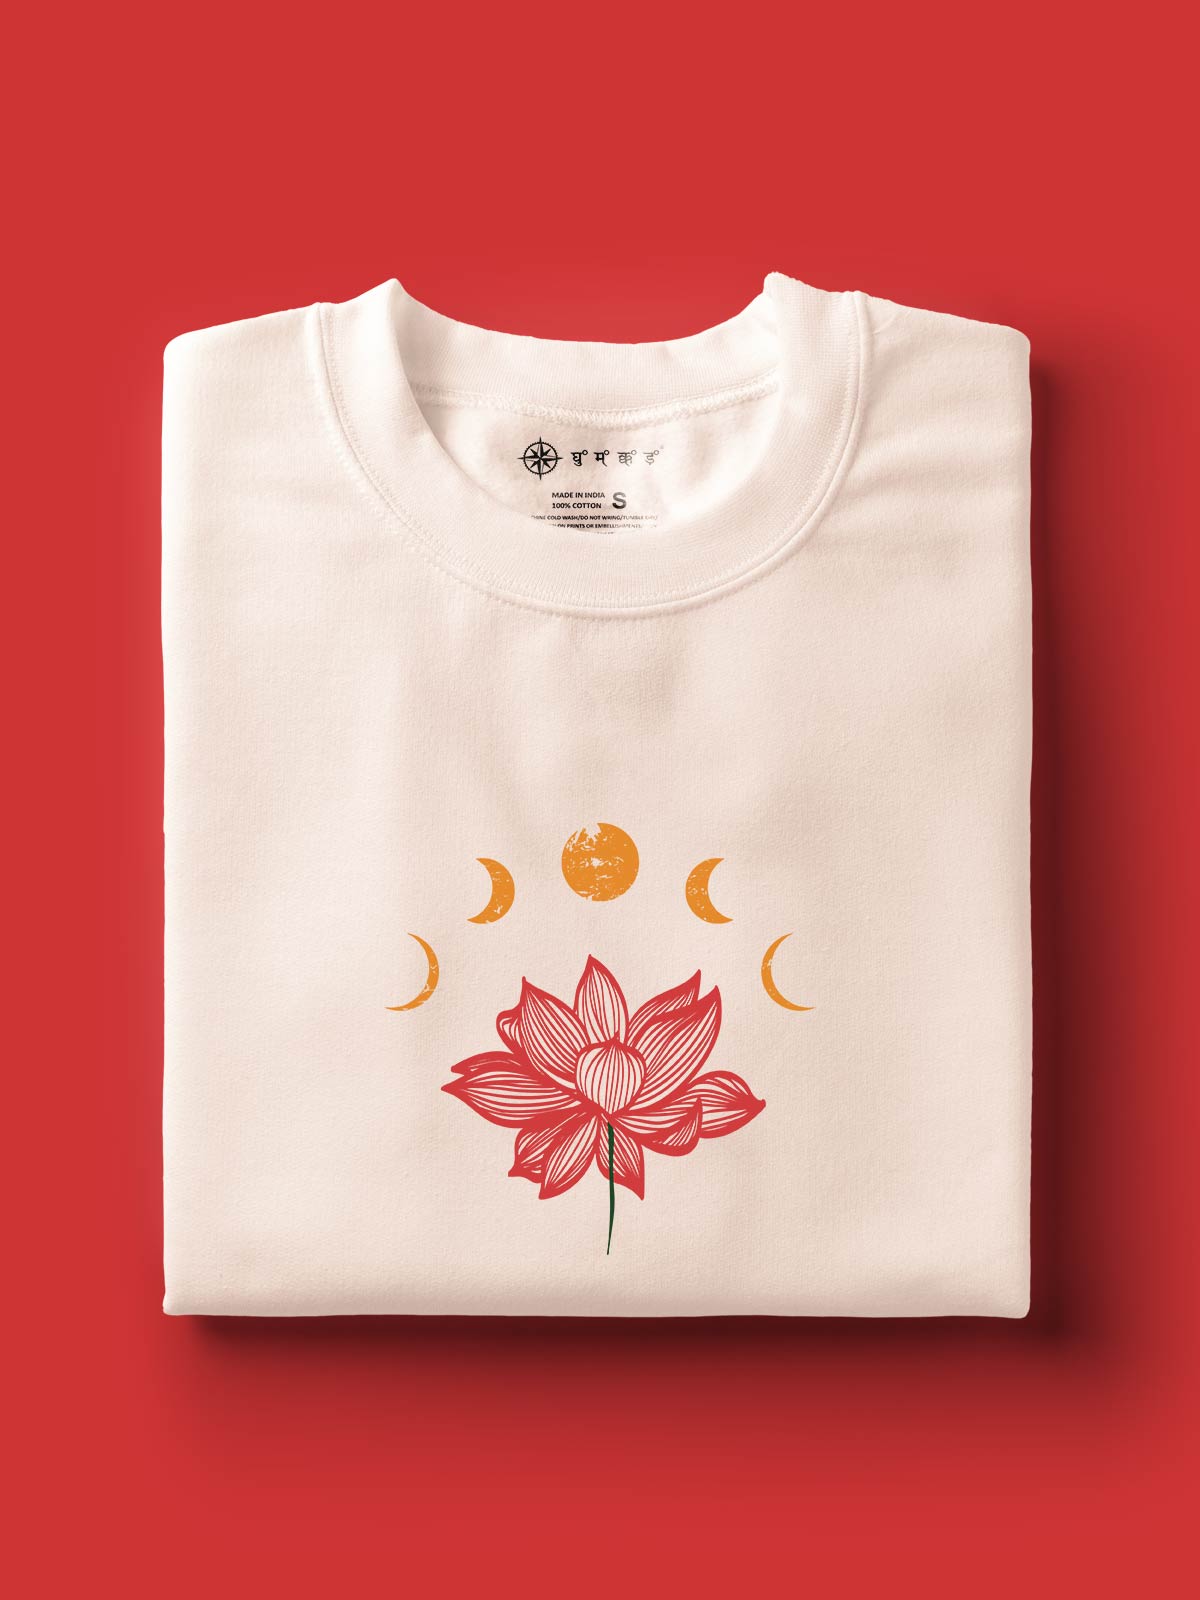 Lotus-printed-t-shirt-for-men by Ghumakkad